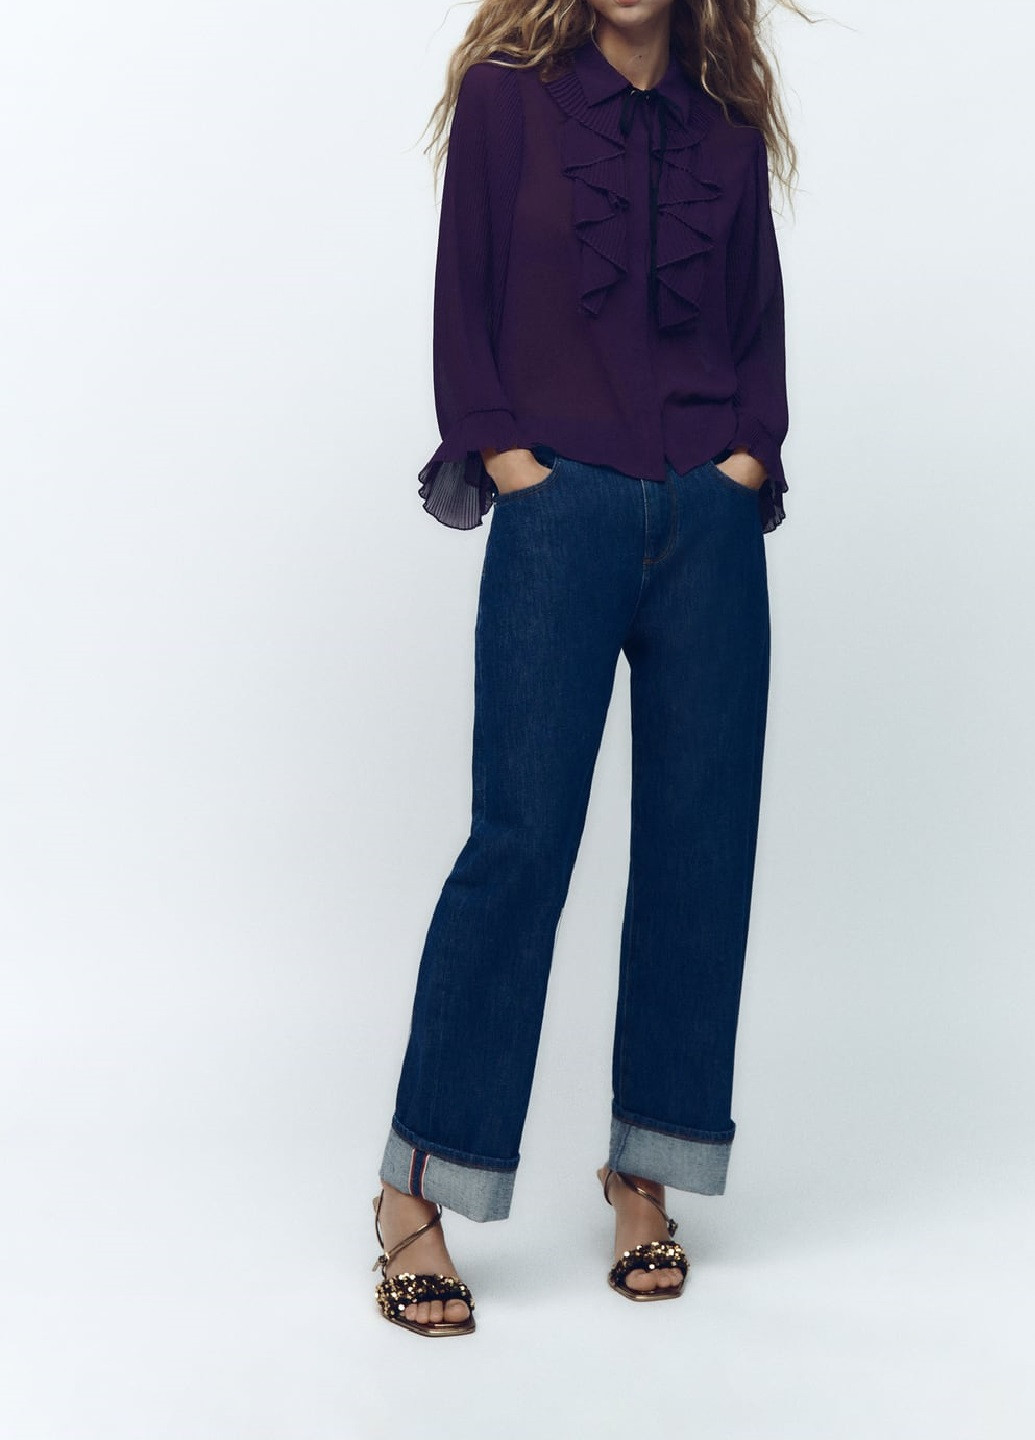 Фіолетова демісезонна блуза Zara